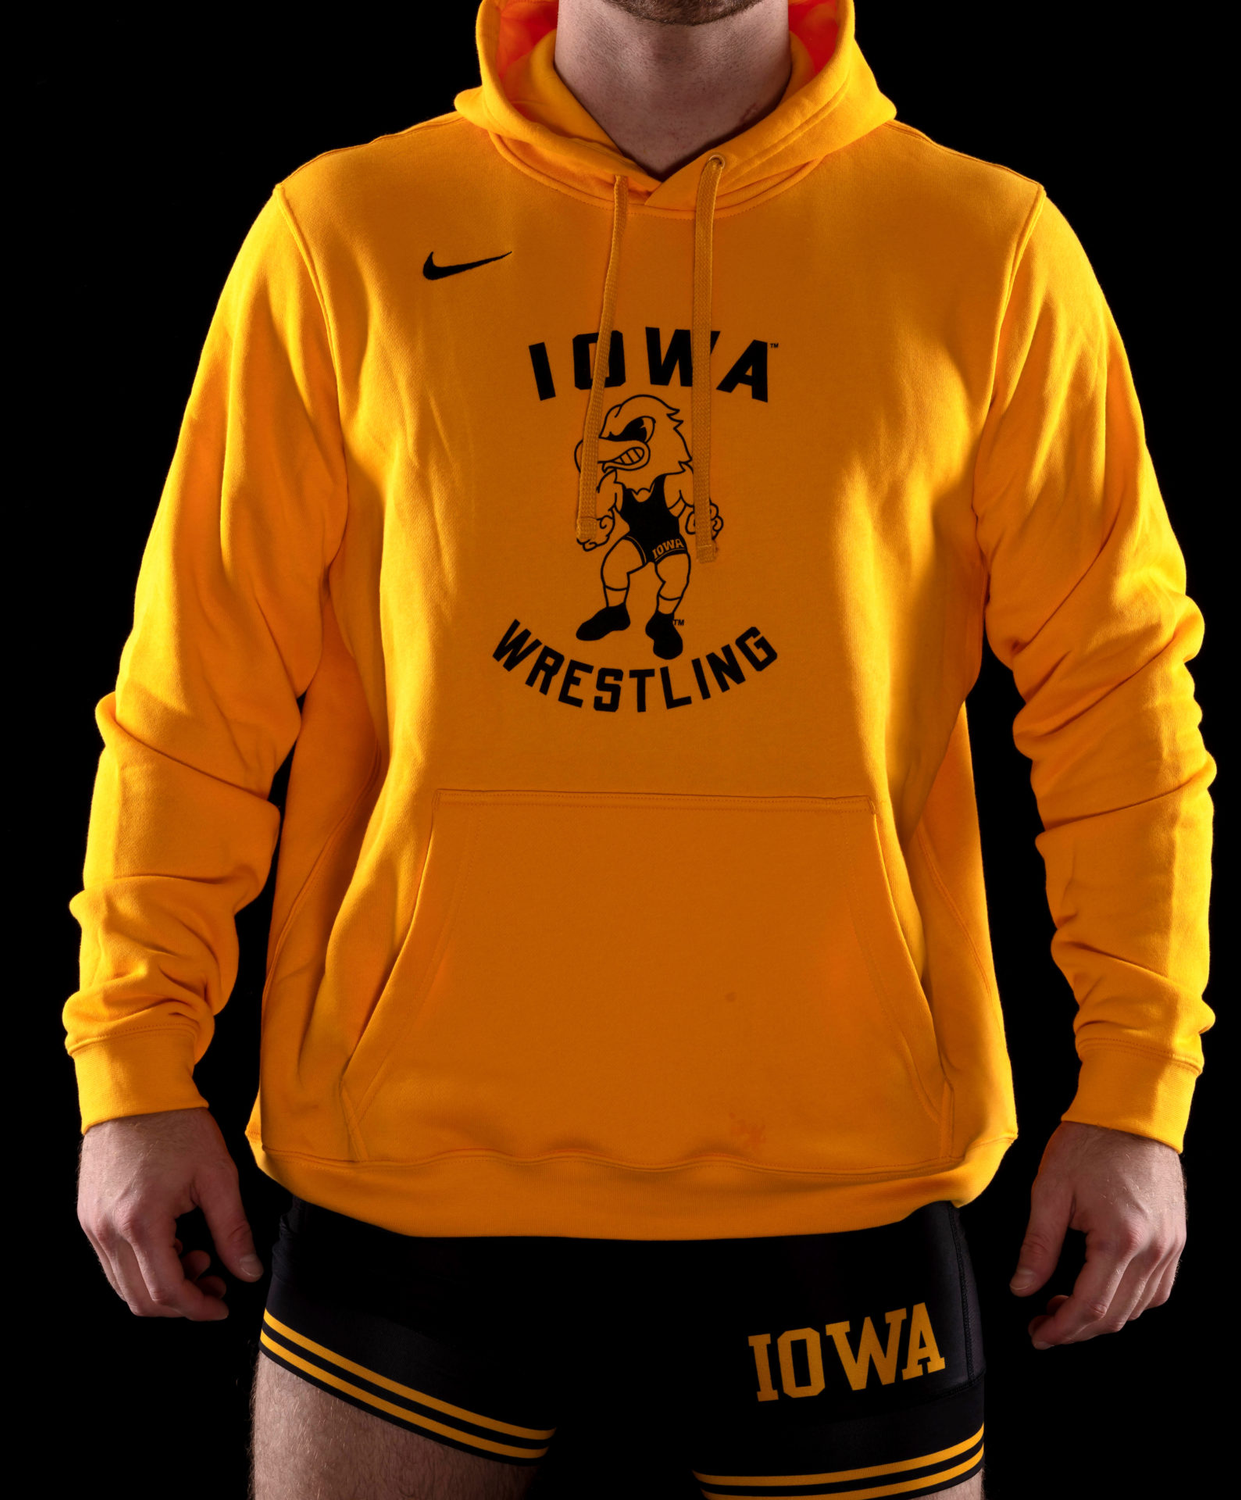 nike iowa wrestling sweatshirt